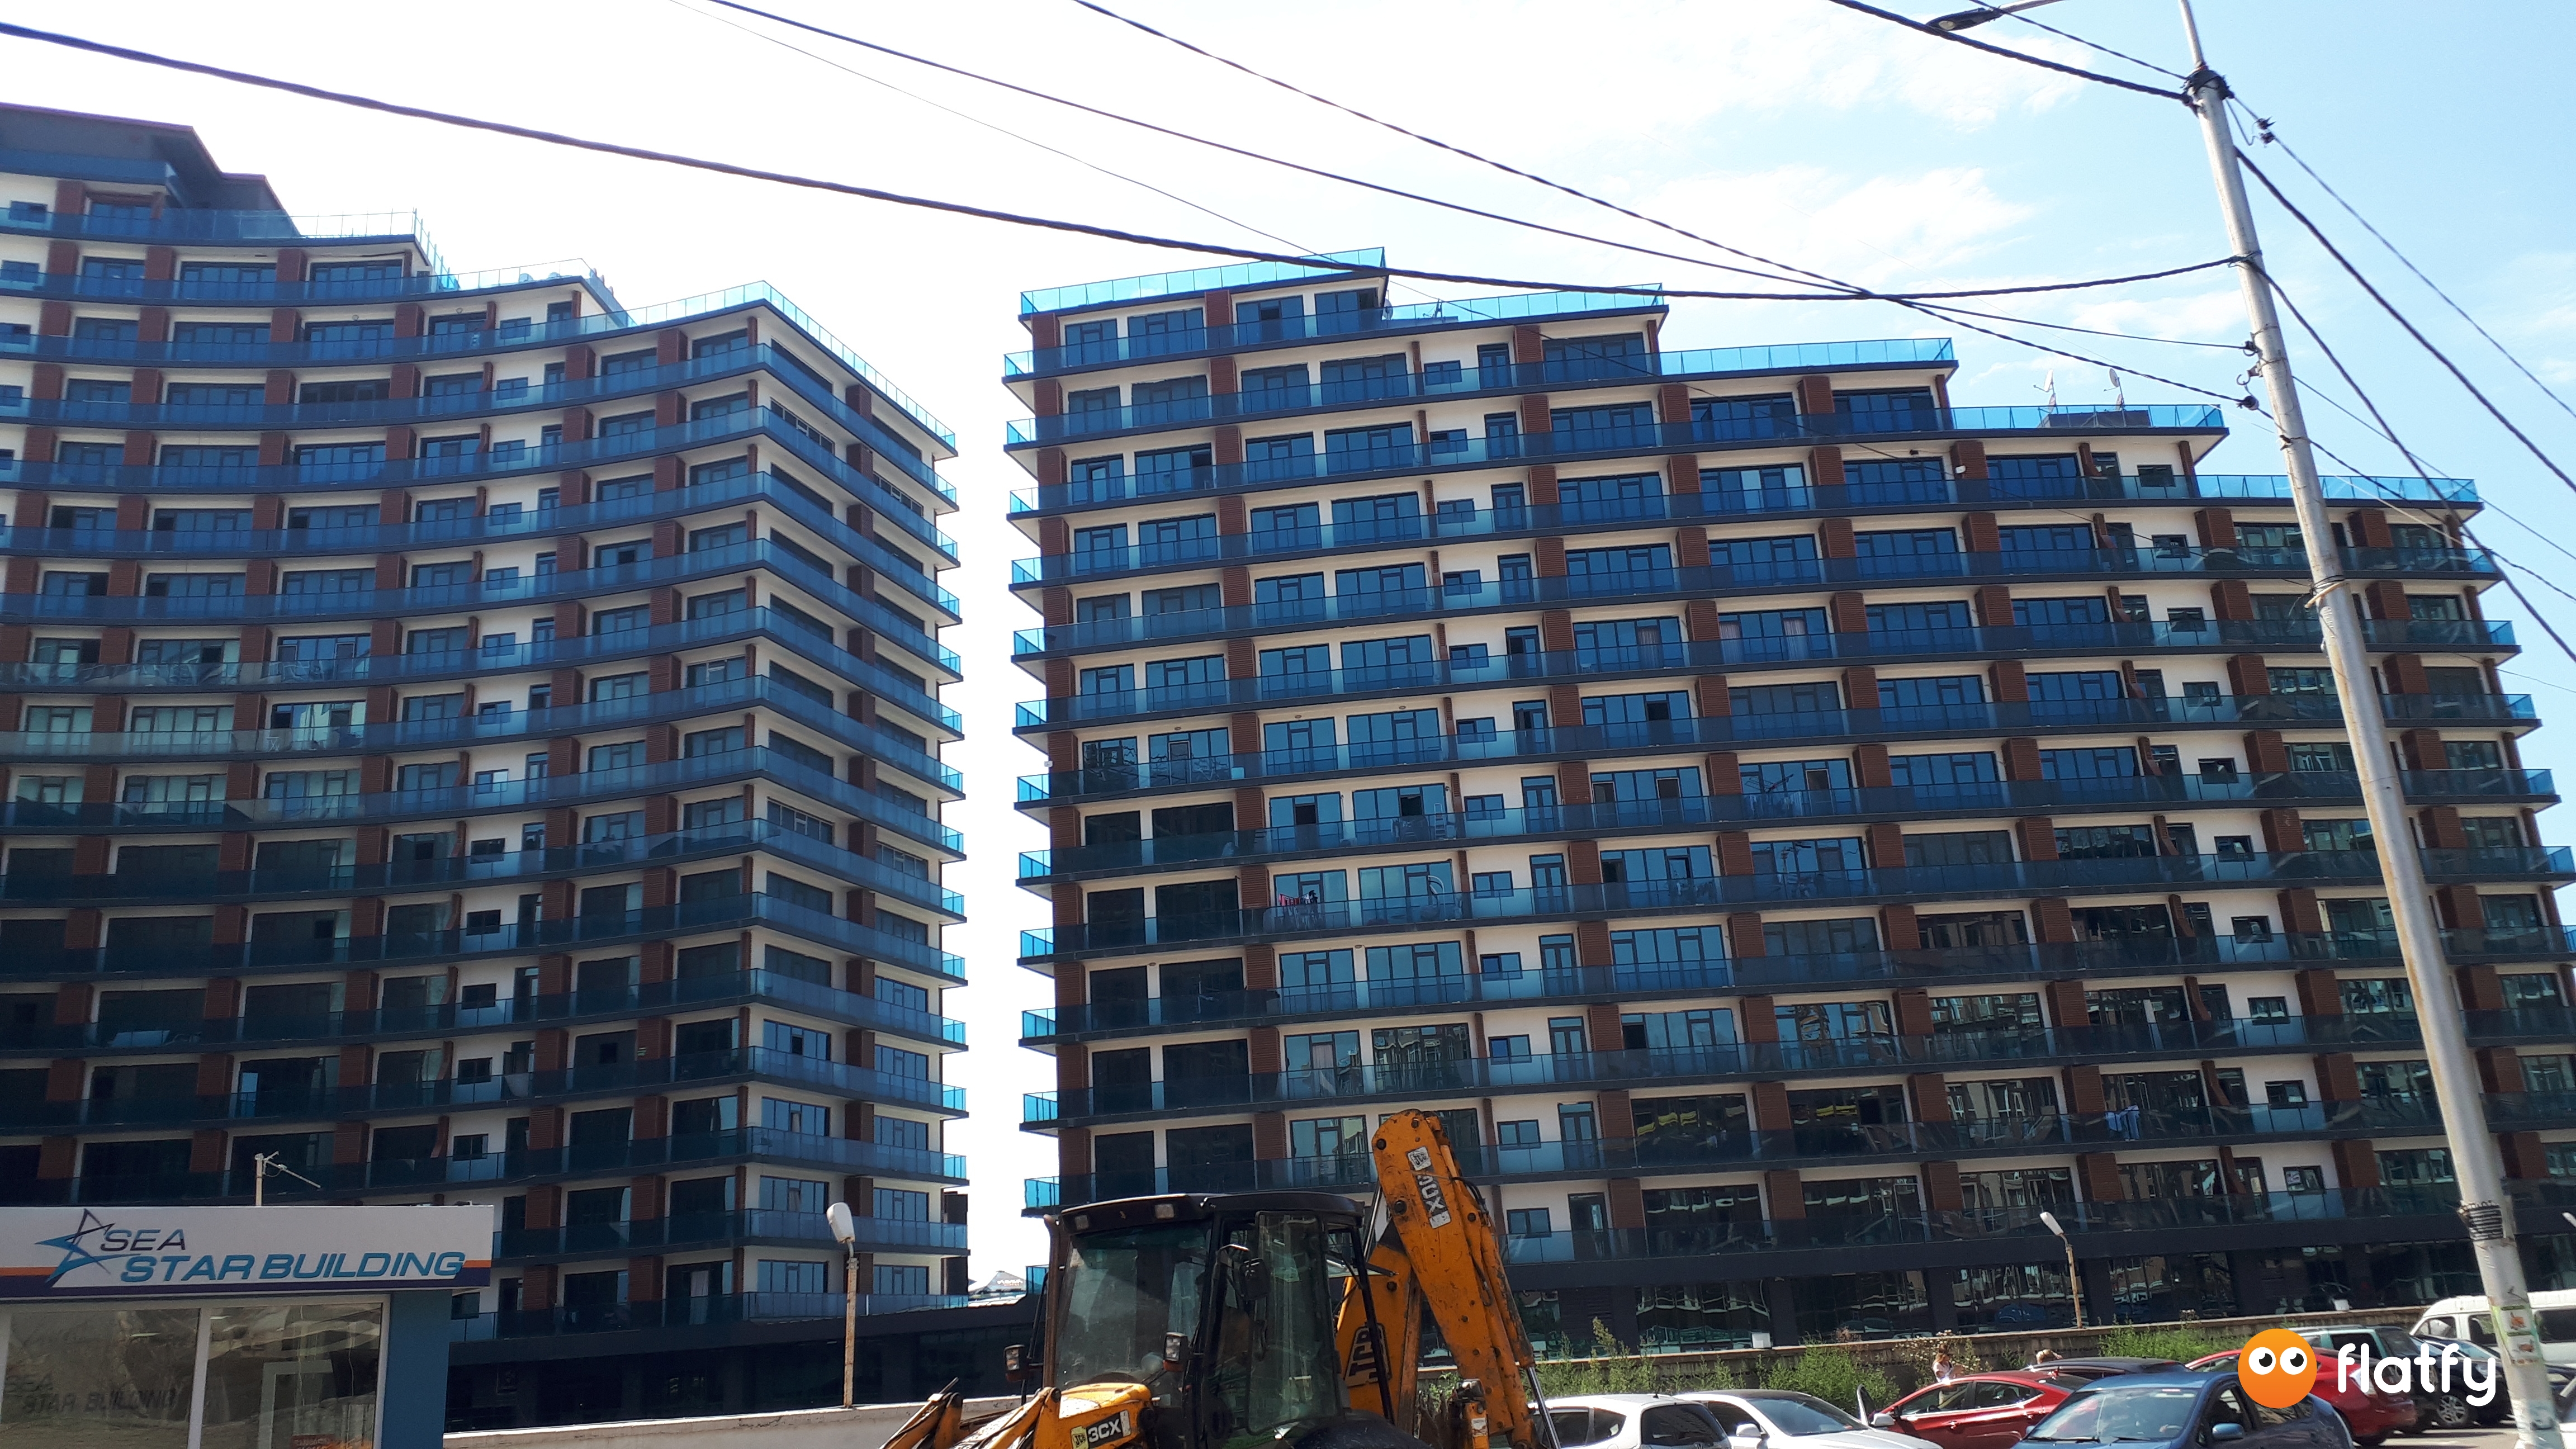 Construction progress Metro City Residence - Angle 4, August 2019